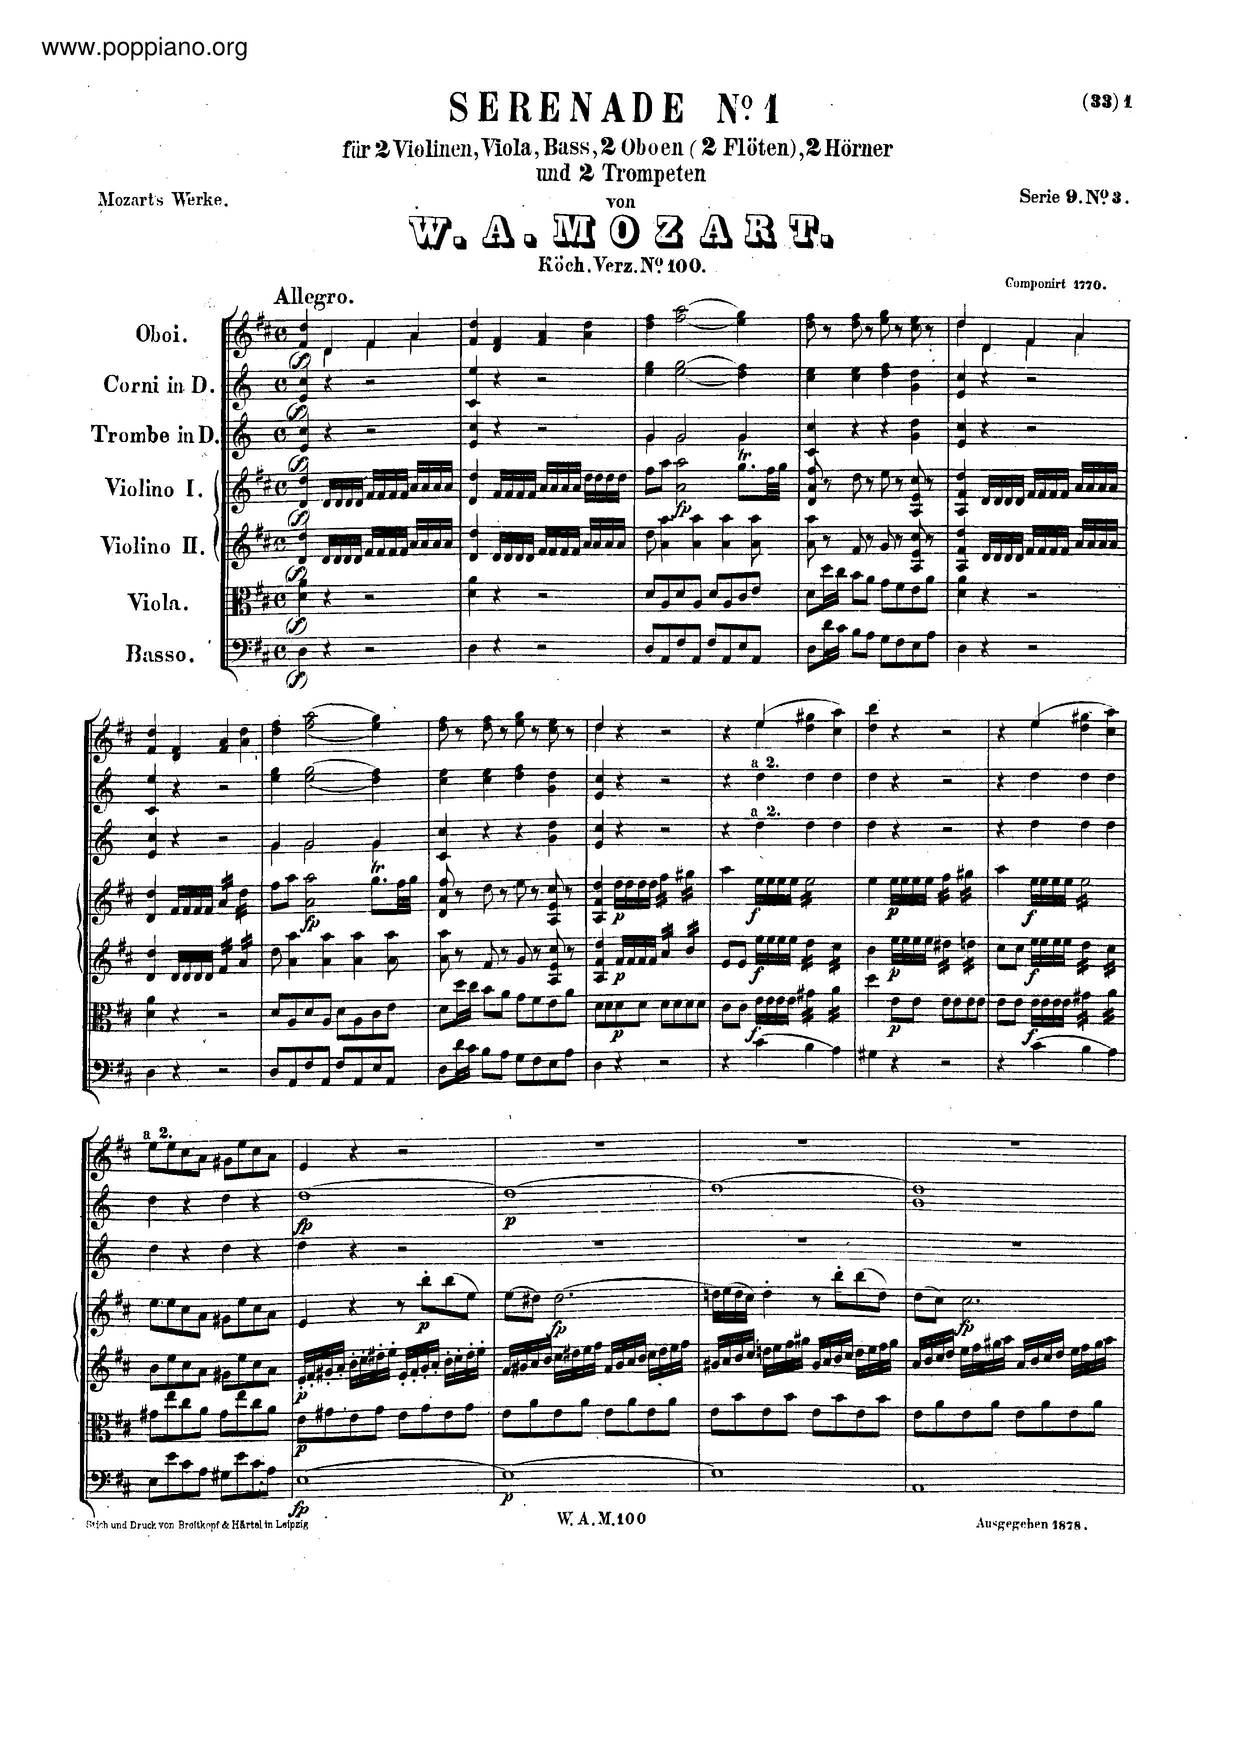 Cassation In D Major, K. 100/62A琴譜